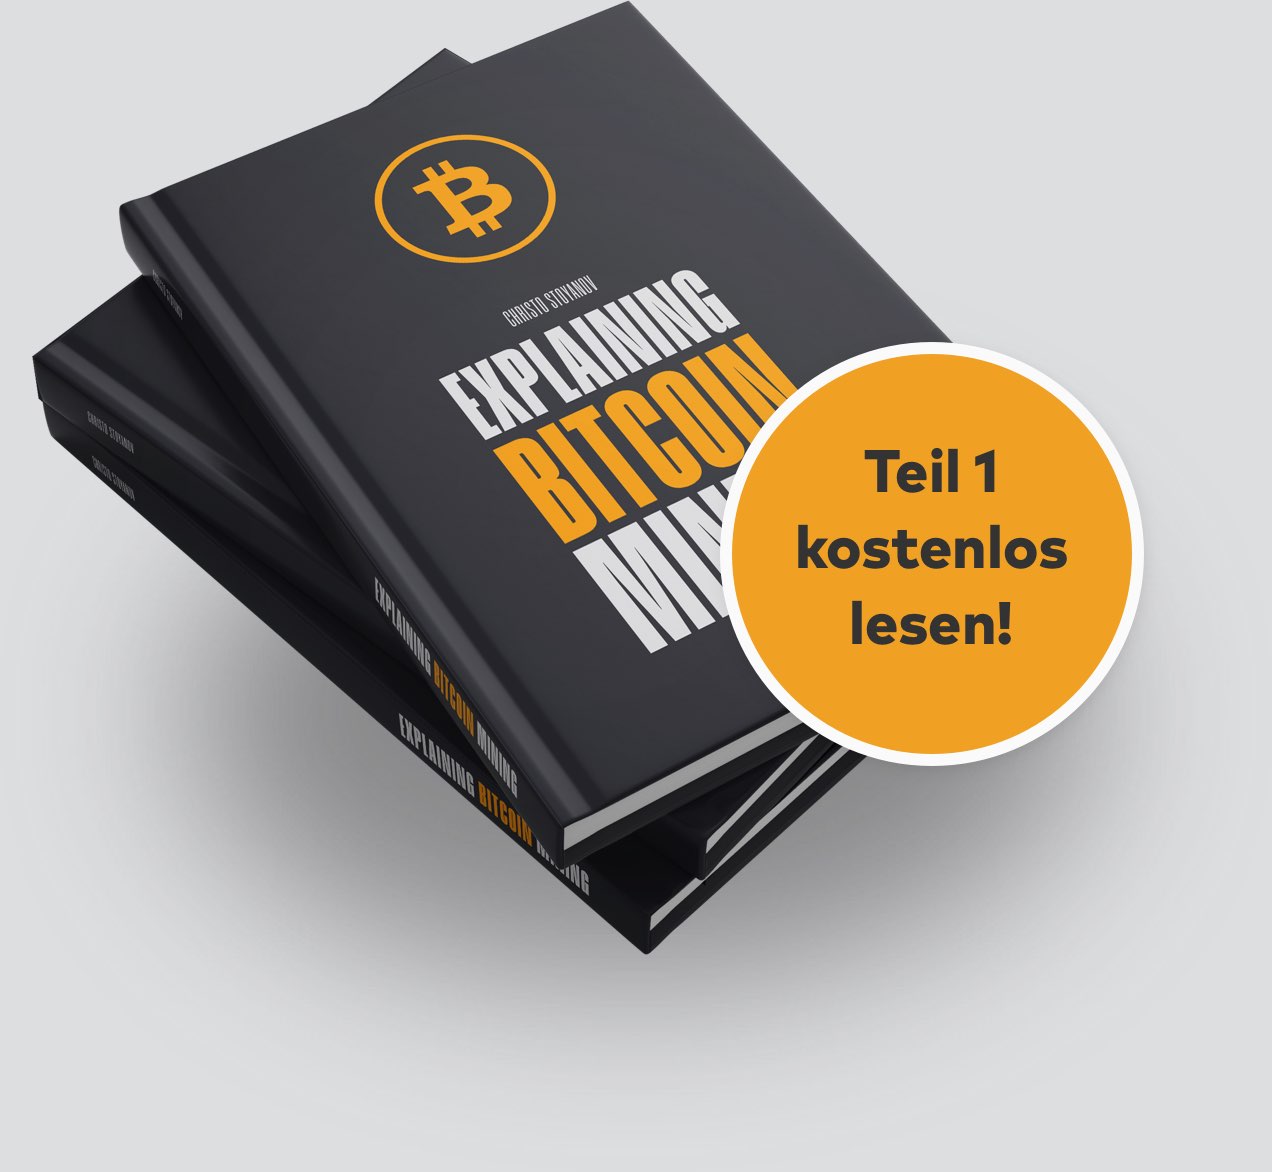 Buch: Explaining Bitcoin Mining von Christo Stoyanov